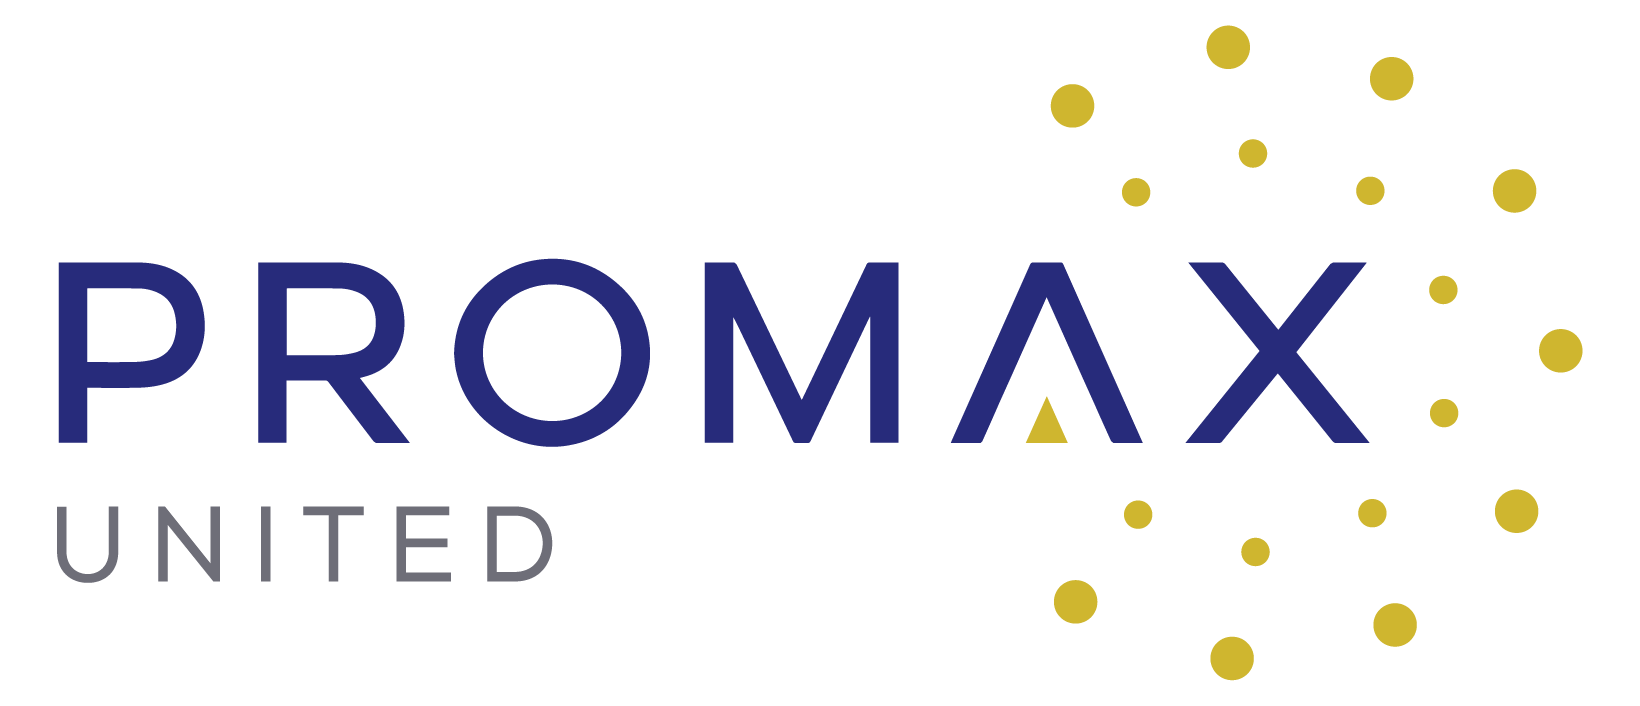 Promax United Logo (1).png